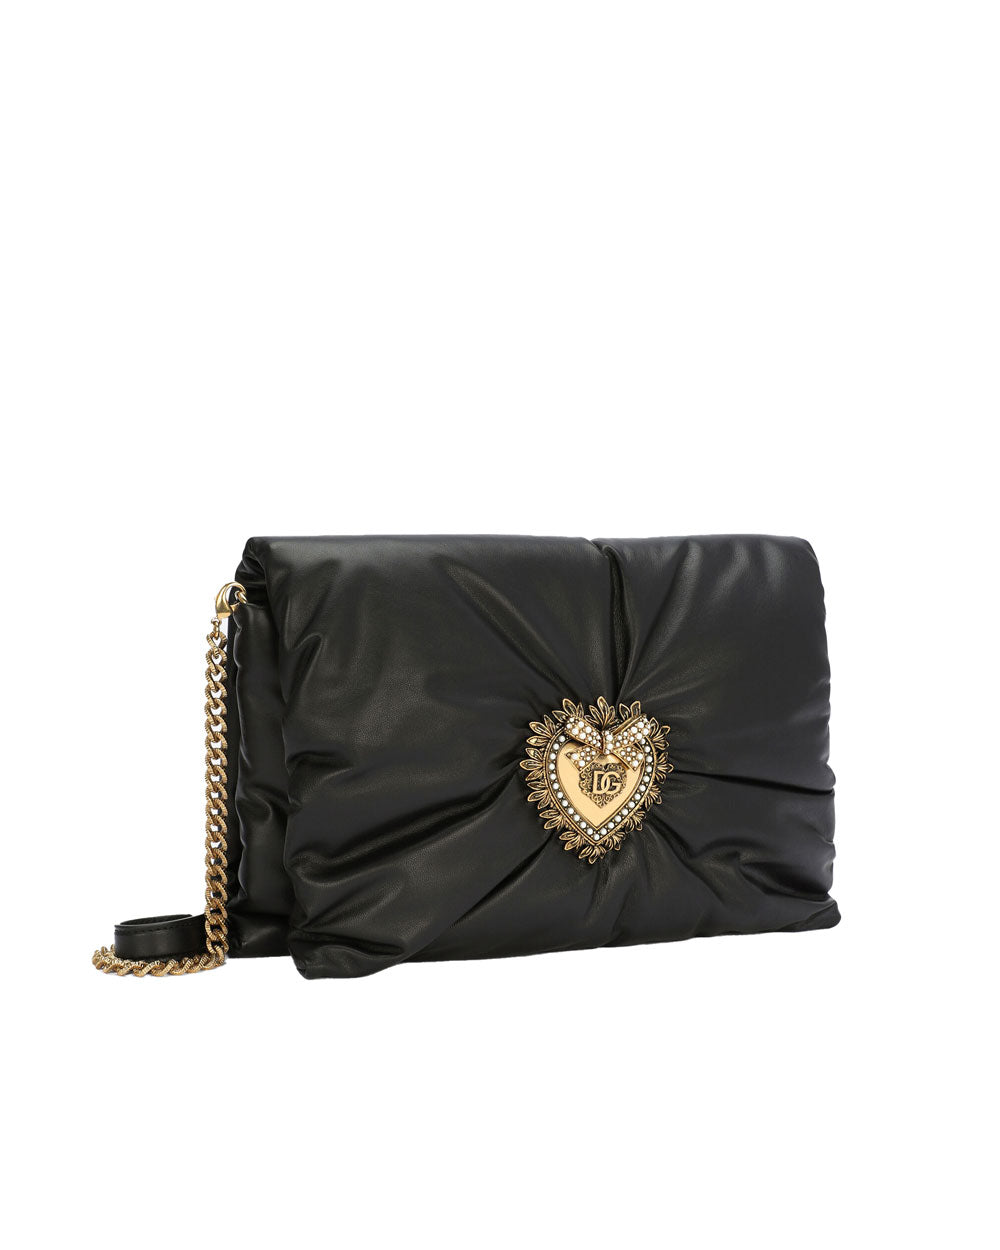 Dolce & Gabbana Large Devotion Bag in Black – Stanley Korshak